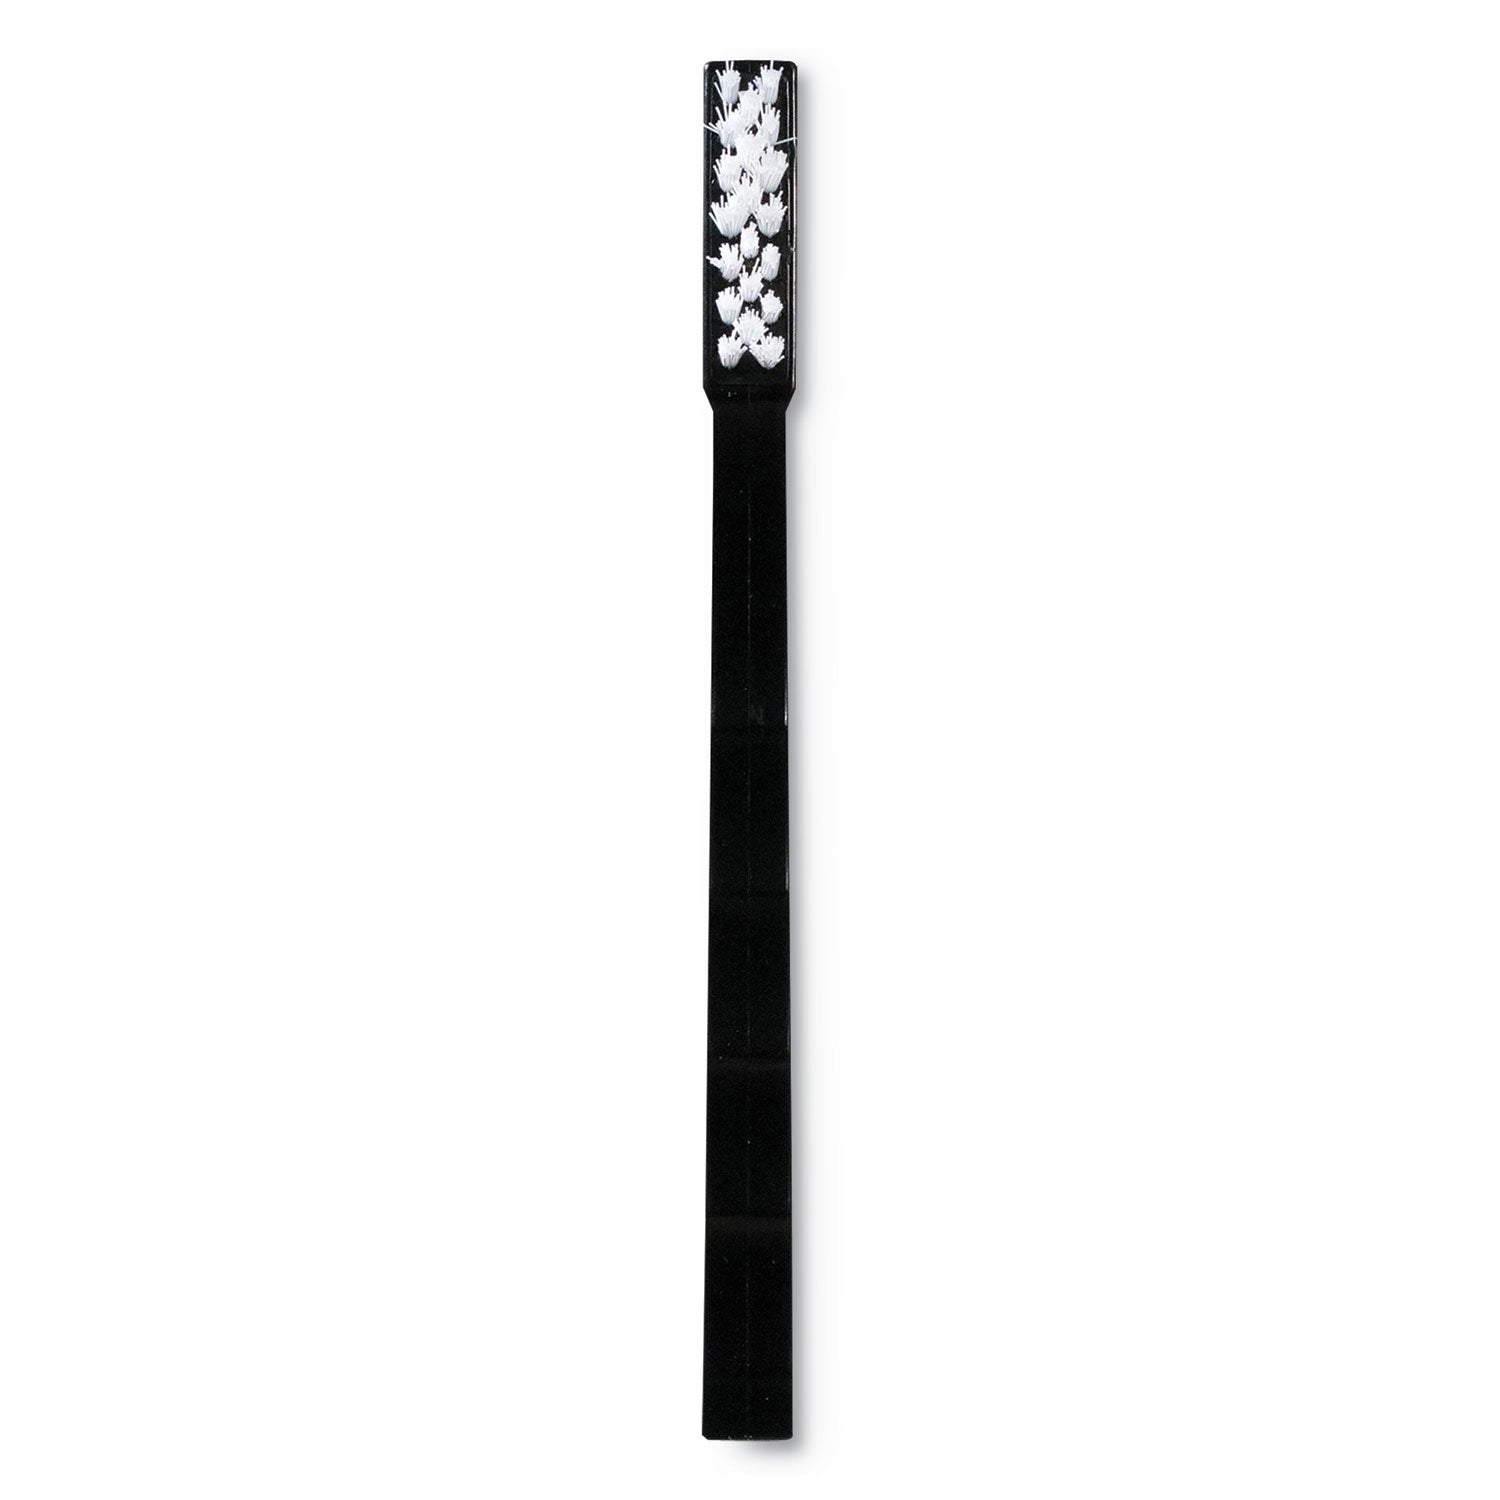 flo-pac-utility-toothbrush-style-maintenance-brush-white-nylon-bristles-725-brush-7-black-polypropylene-handle_cfs4067400dz - 2